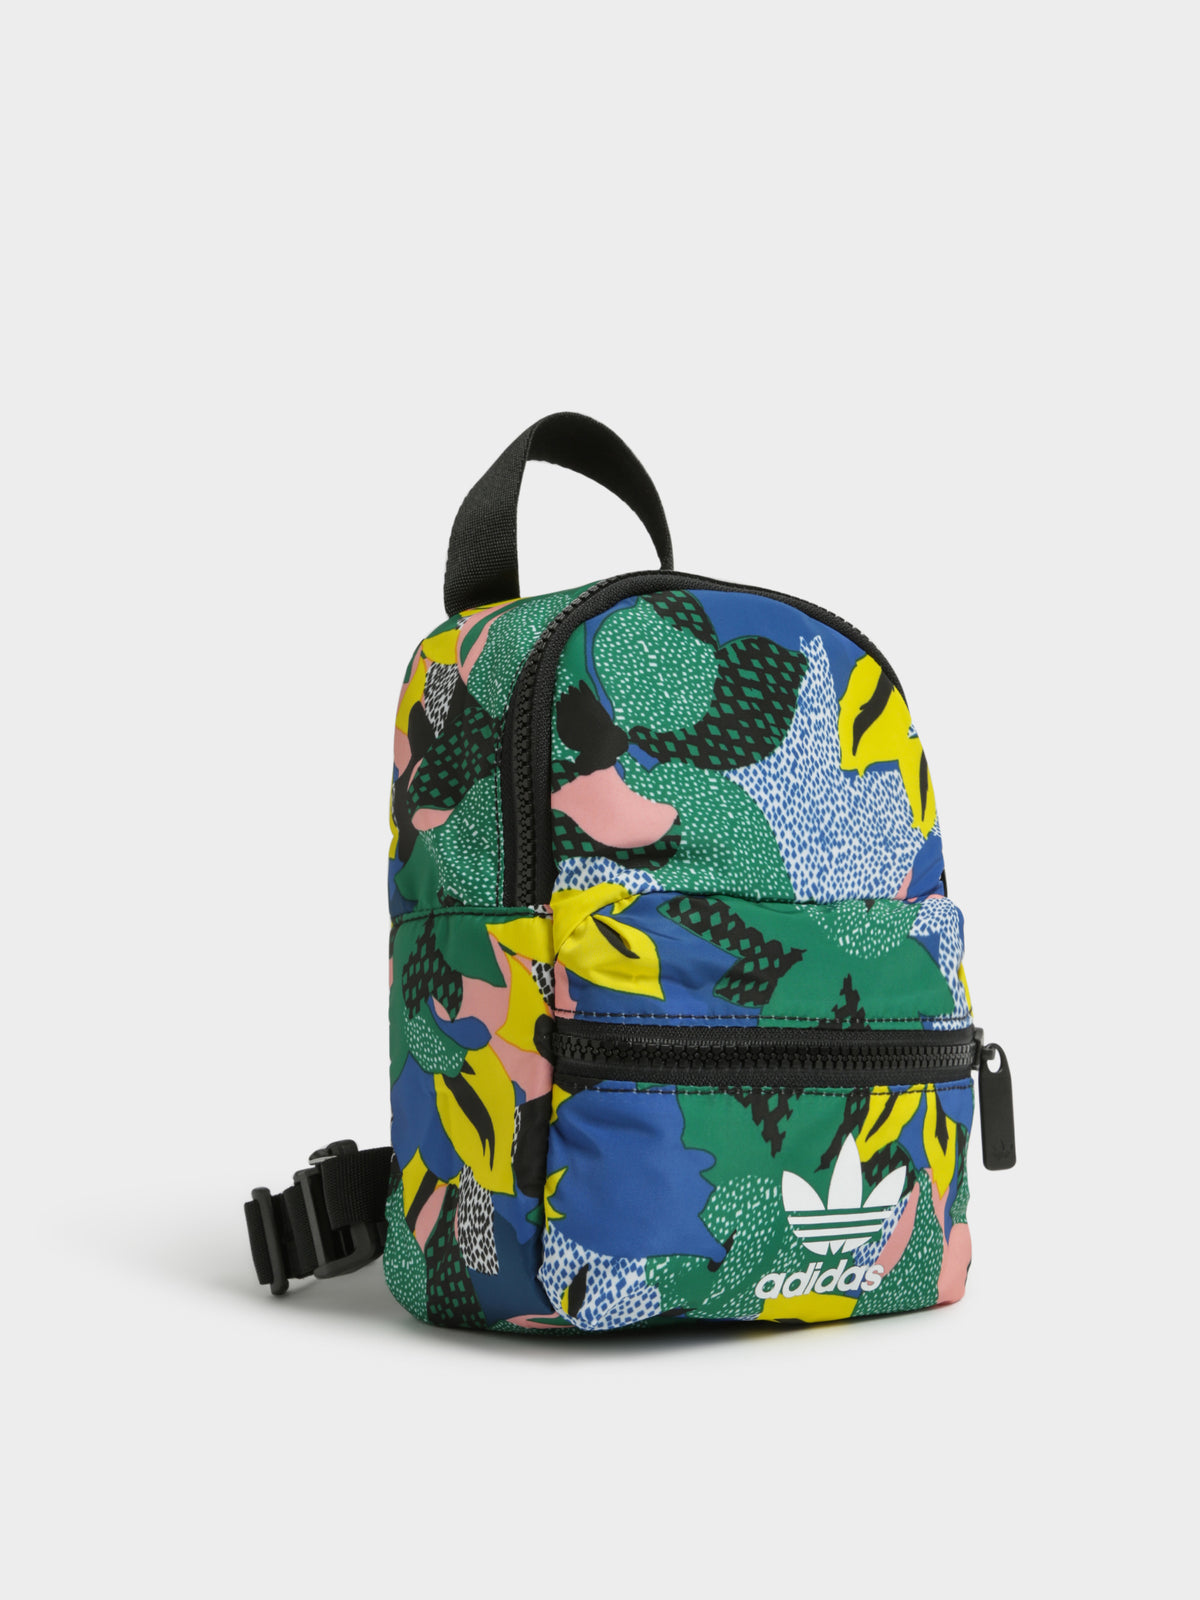 Her Studio London Mini Backpack in Green